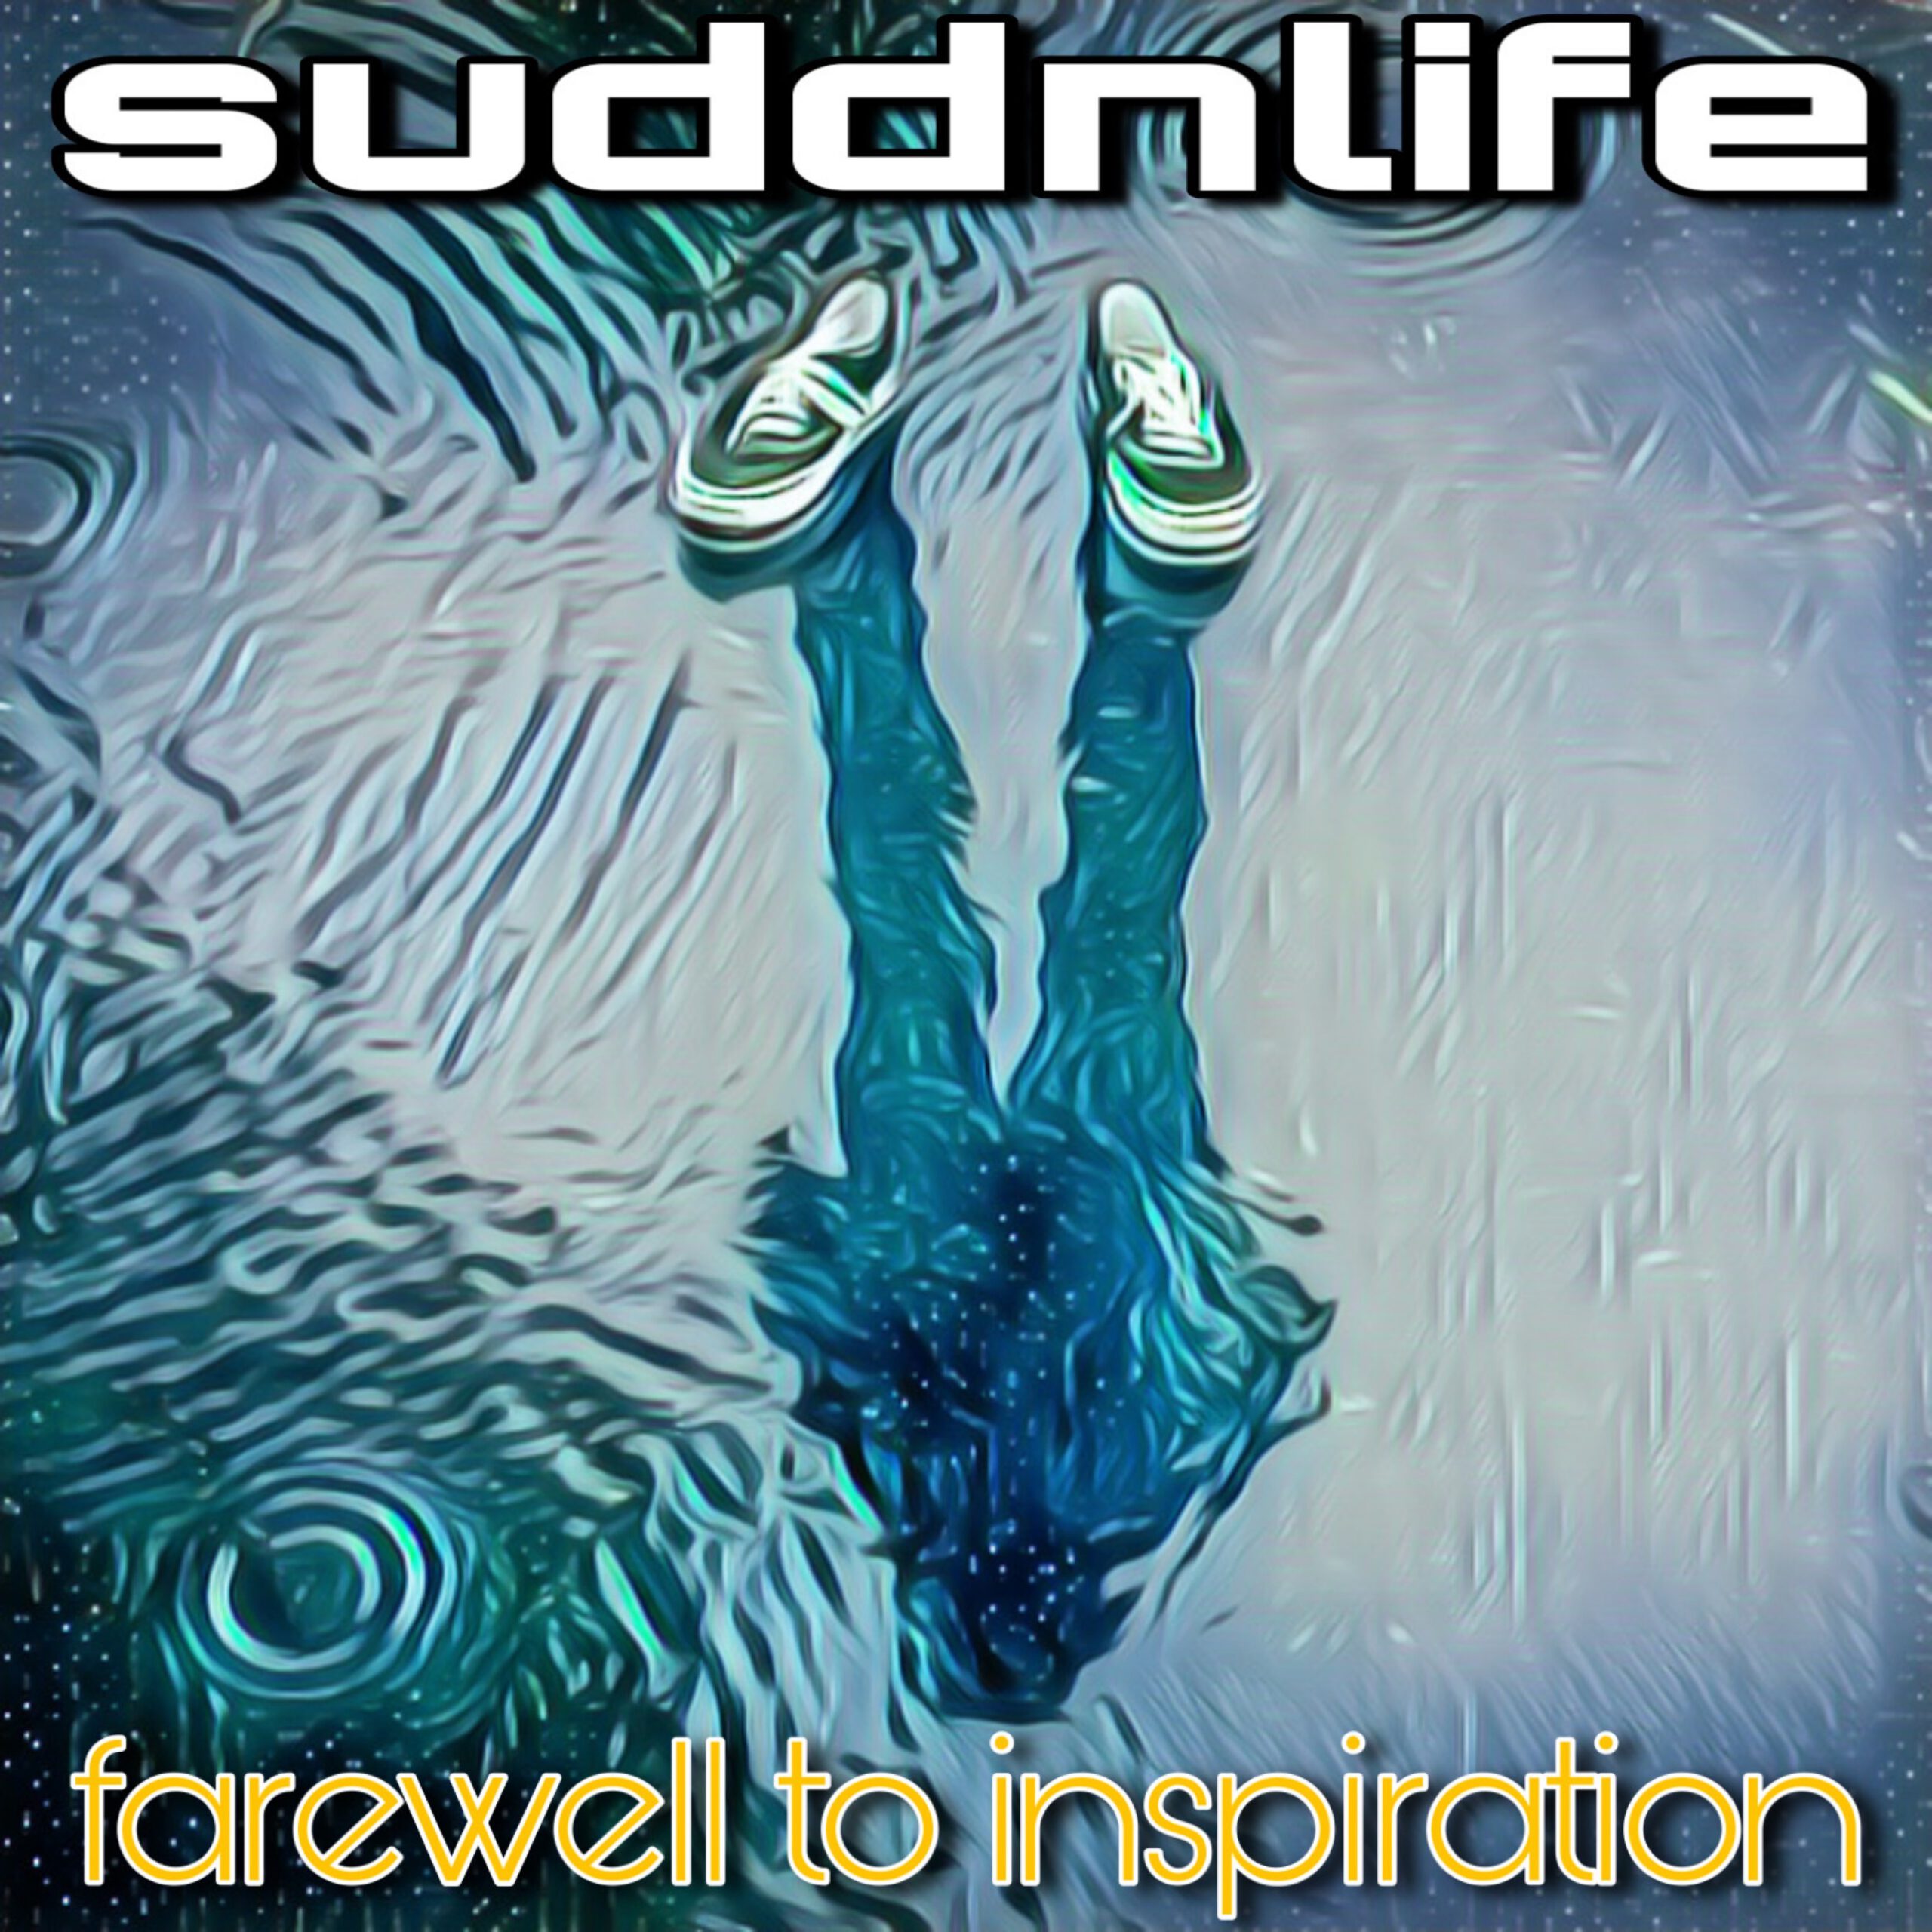 suddnlife - farewell inspiration